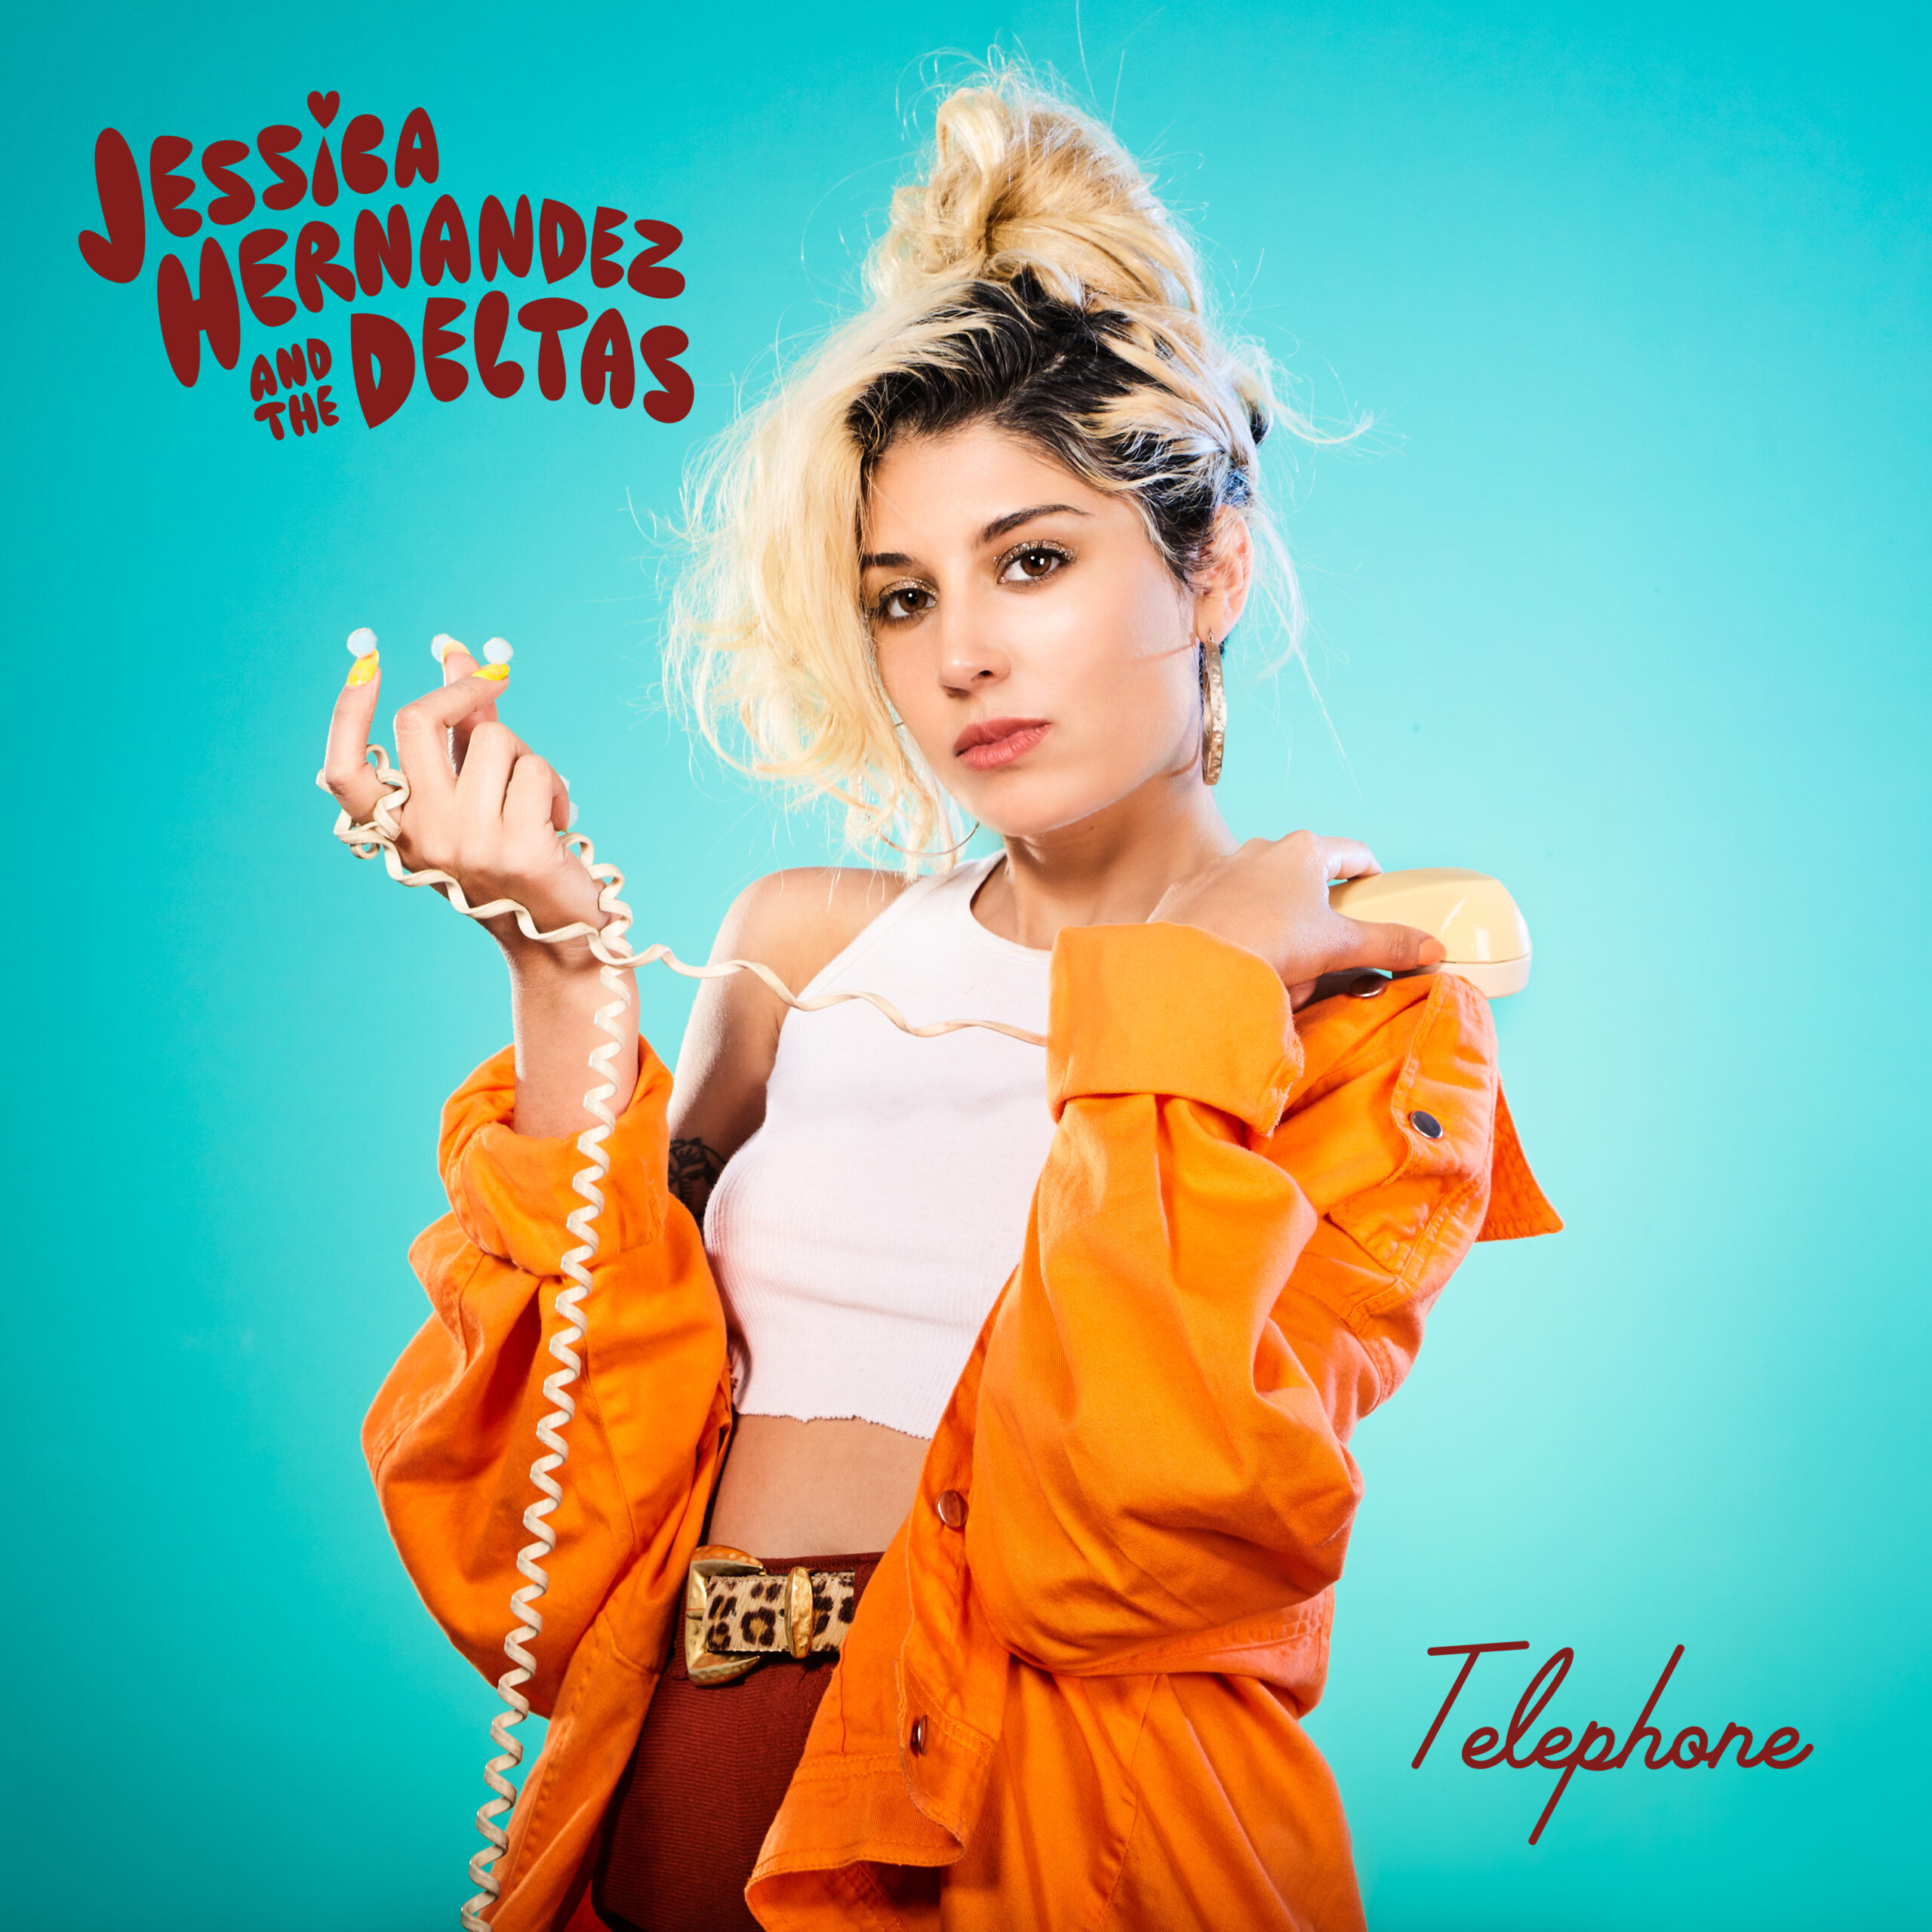 Telephone album cover. Photo by: Jessica Hernandez & The Deltas